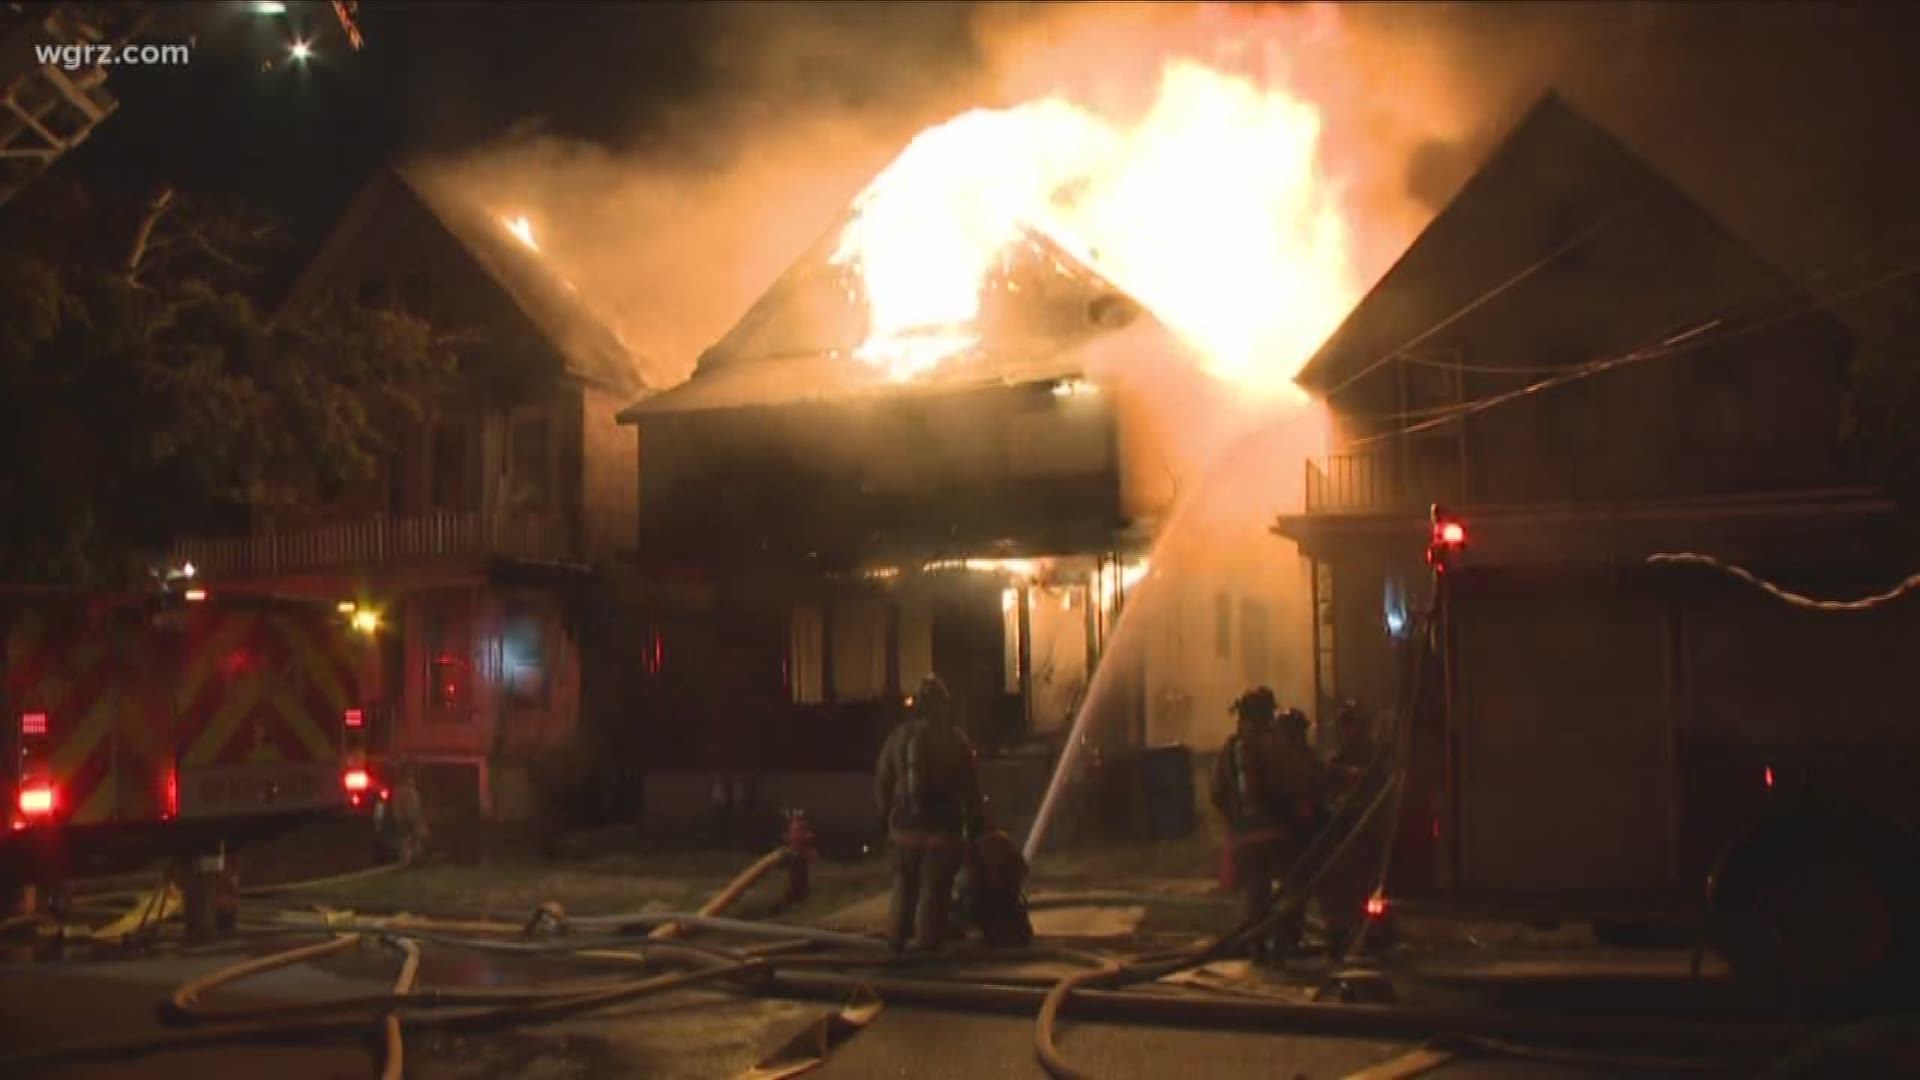 Fire destroys house on Box Avenue in Buffalo